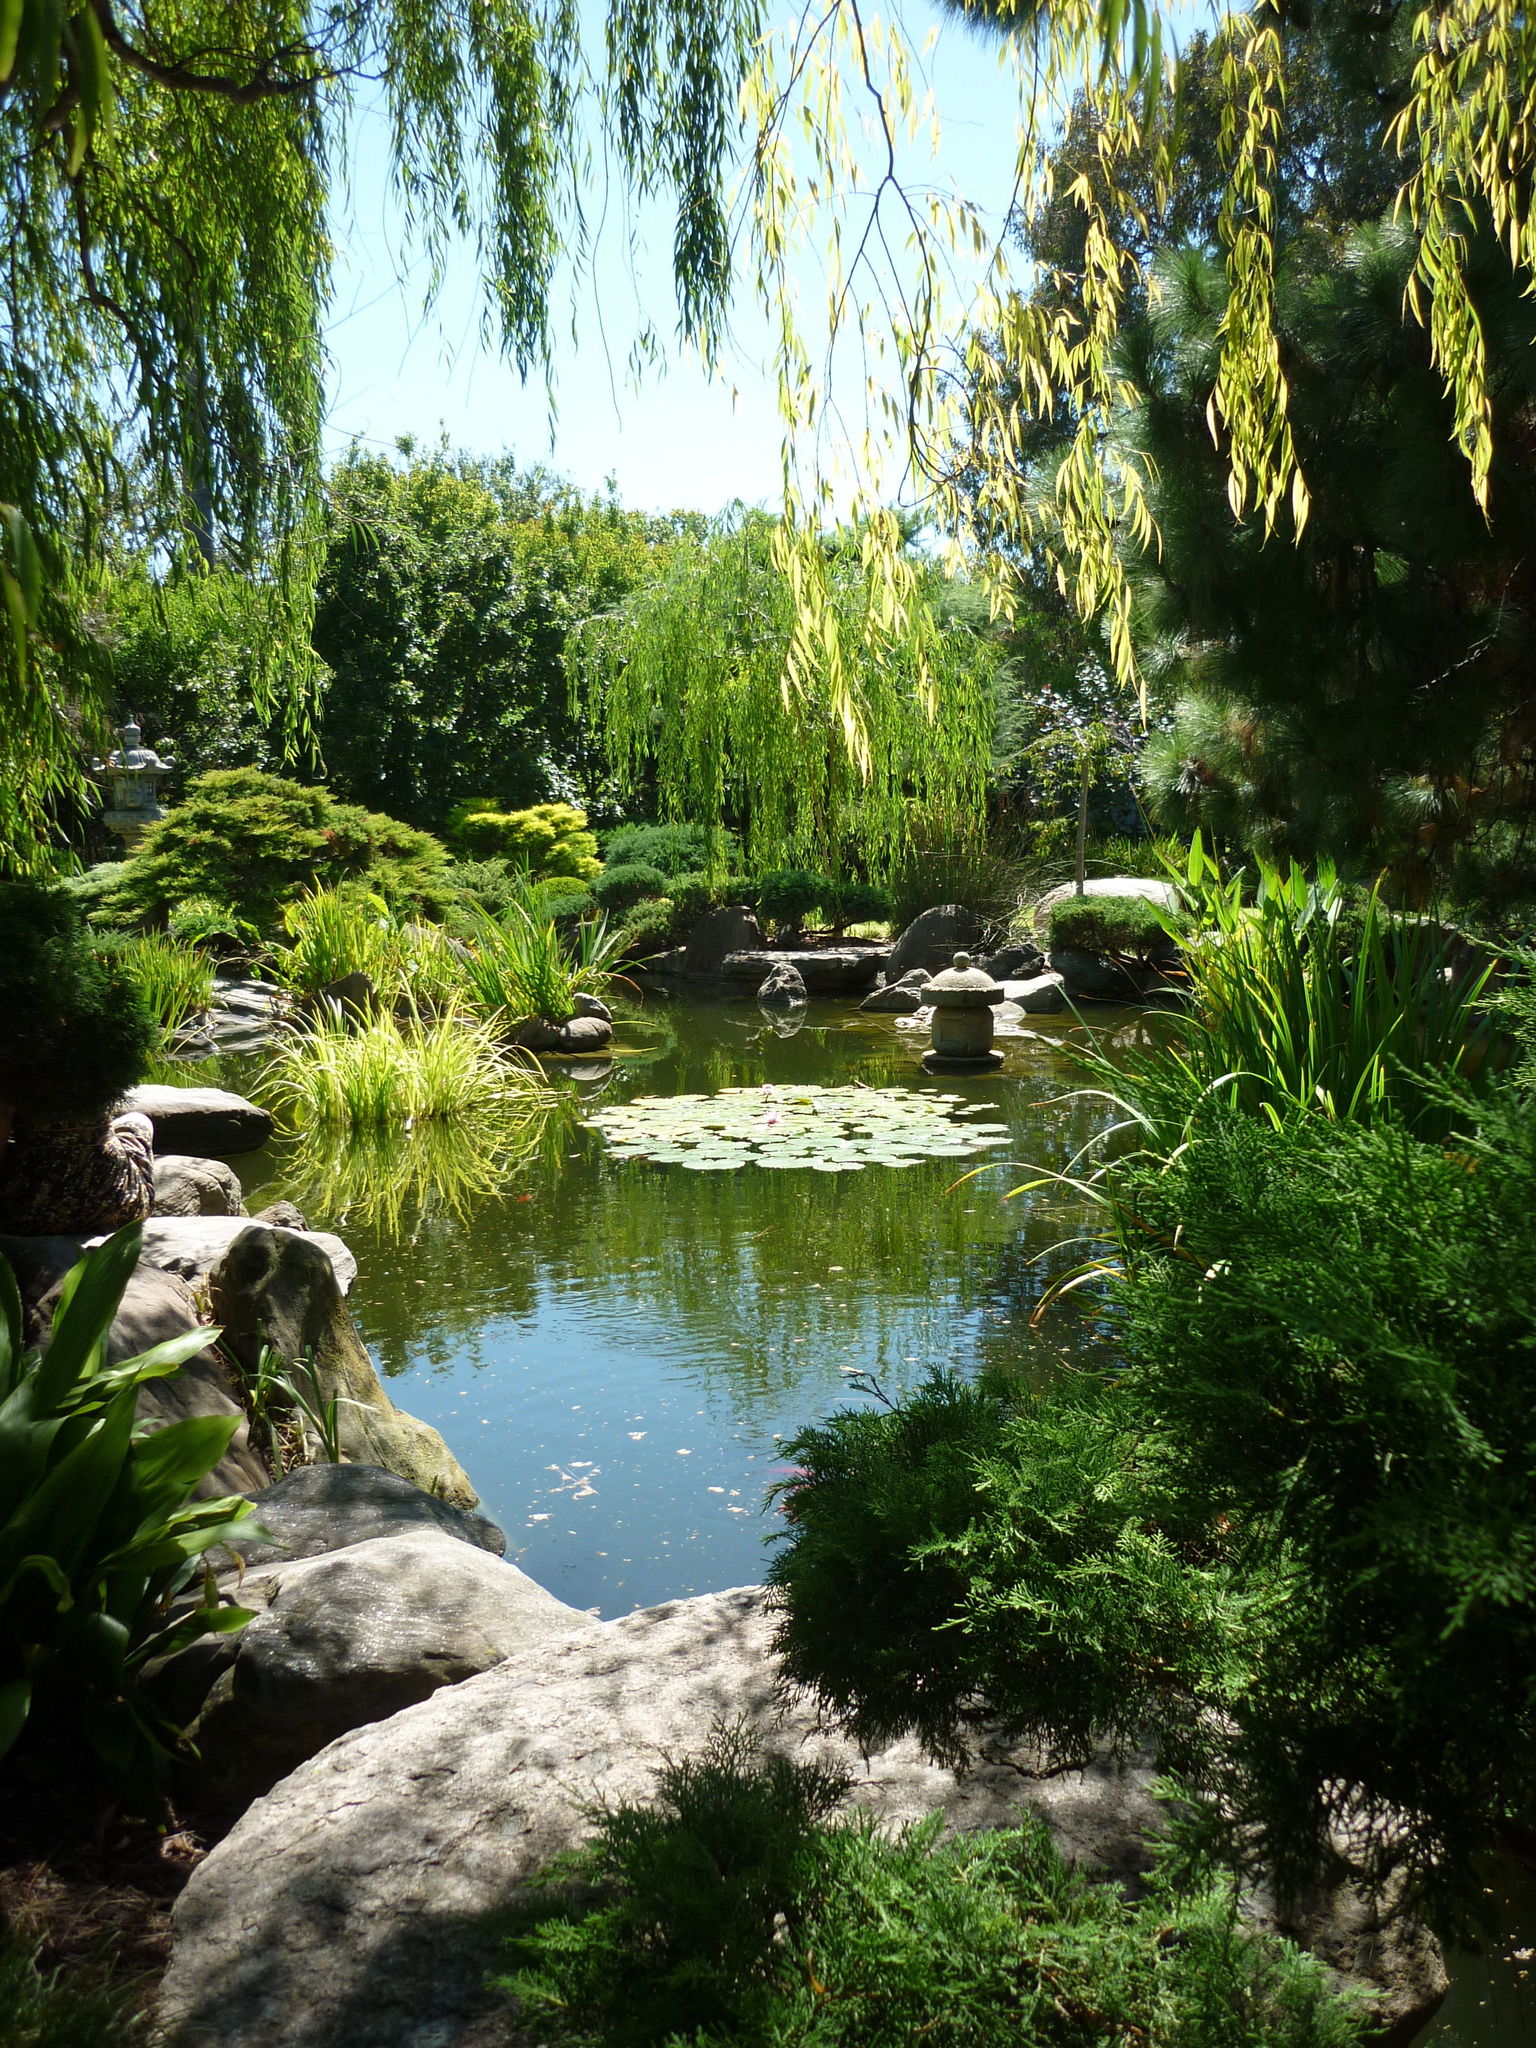 The Adelaide-Himeji Garden